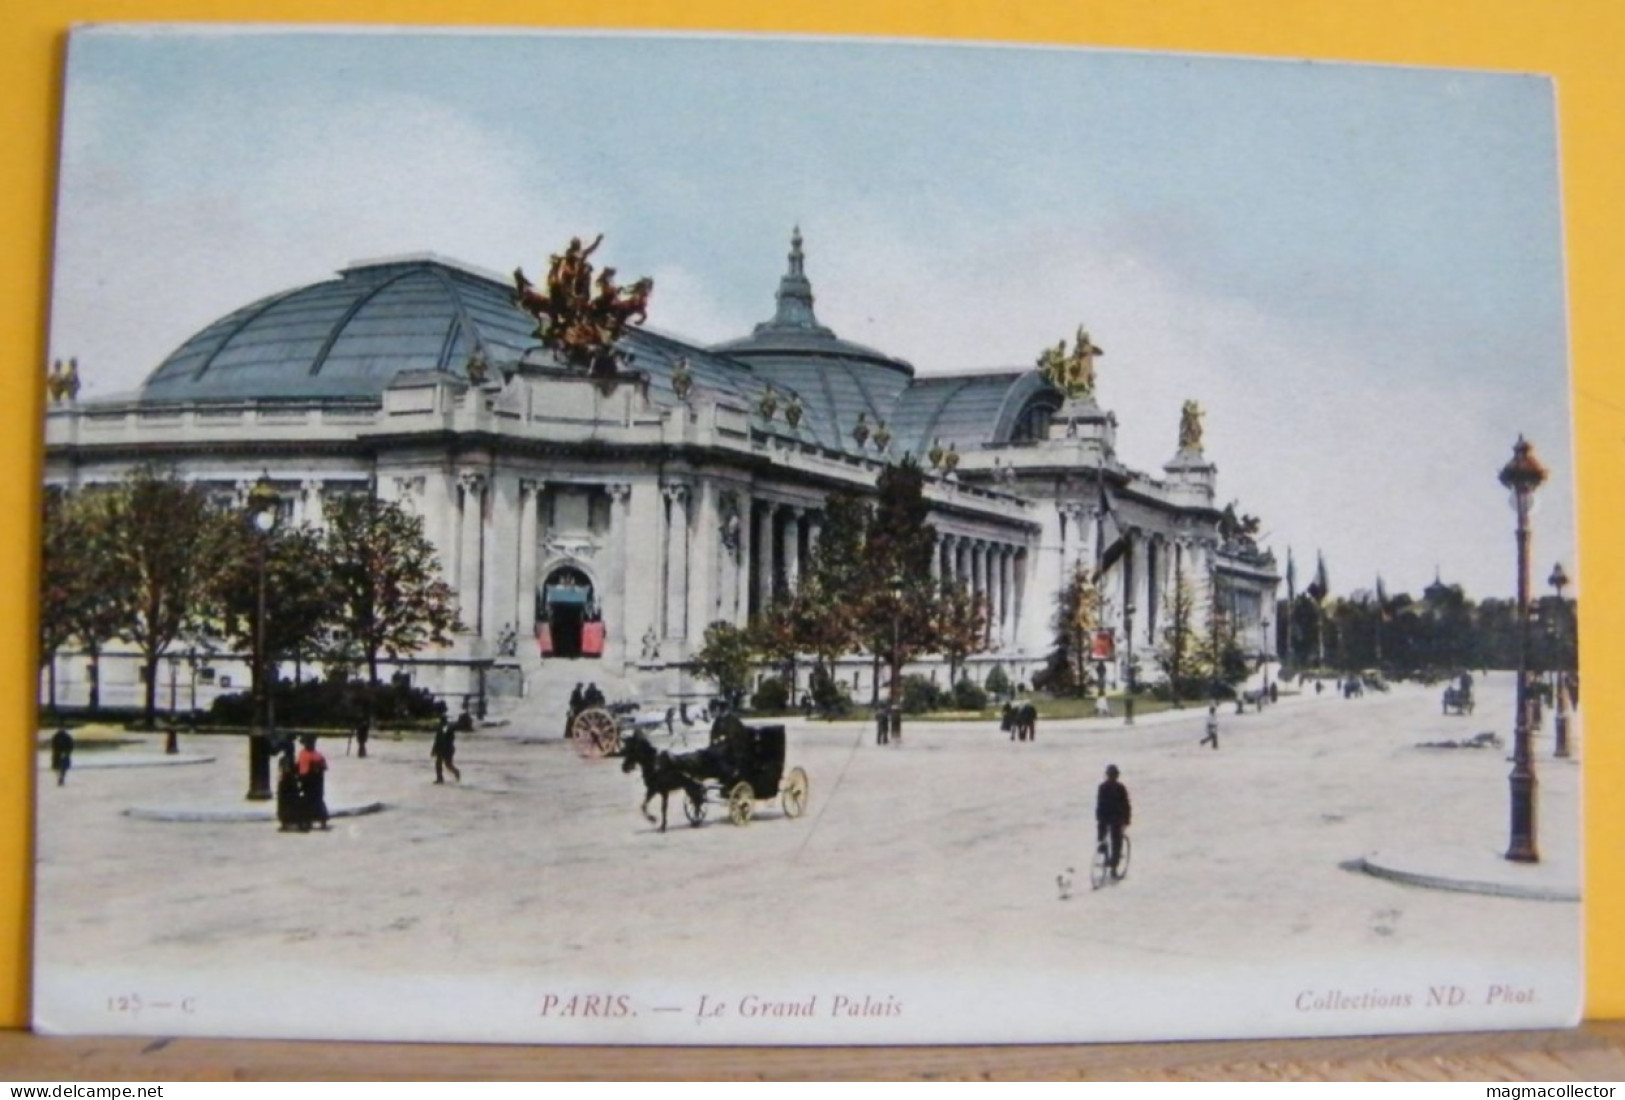 (P1) PARIGI / PARIS - LE GRAND PALAIS  - 125-C - NON VIAGGIATA 1910/20ca - Kerken